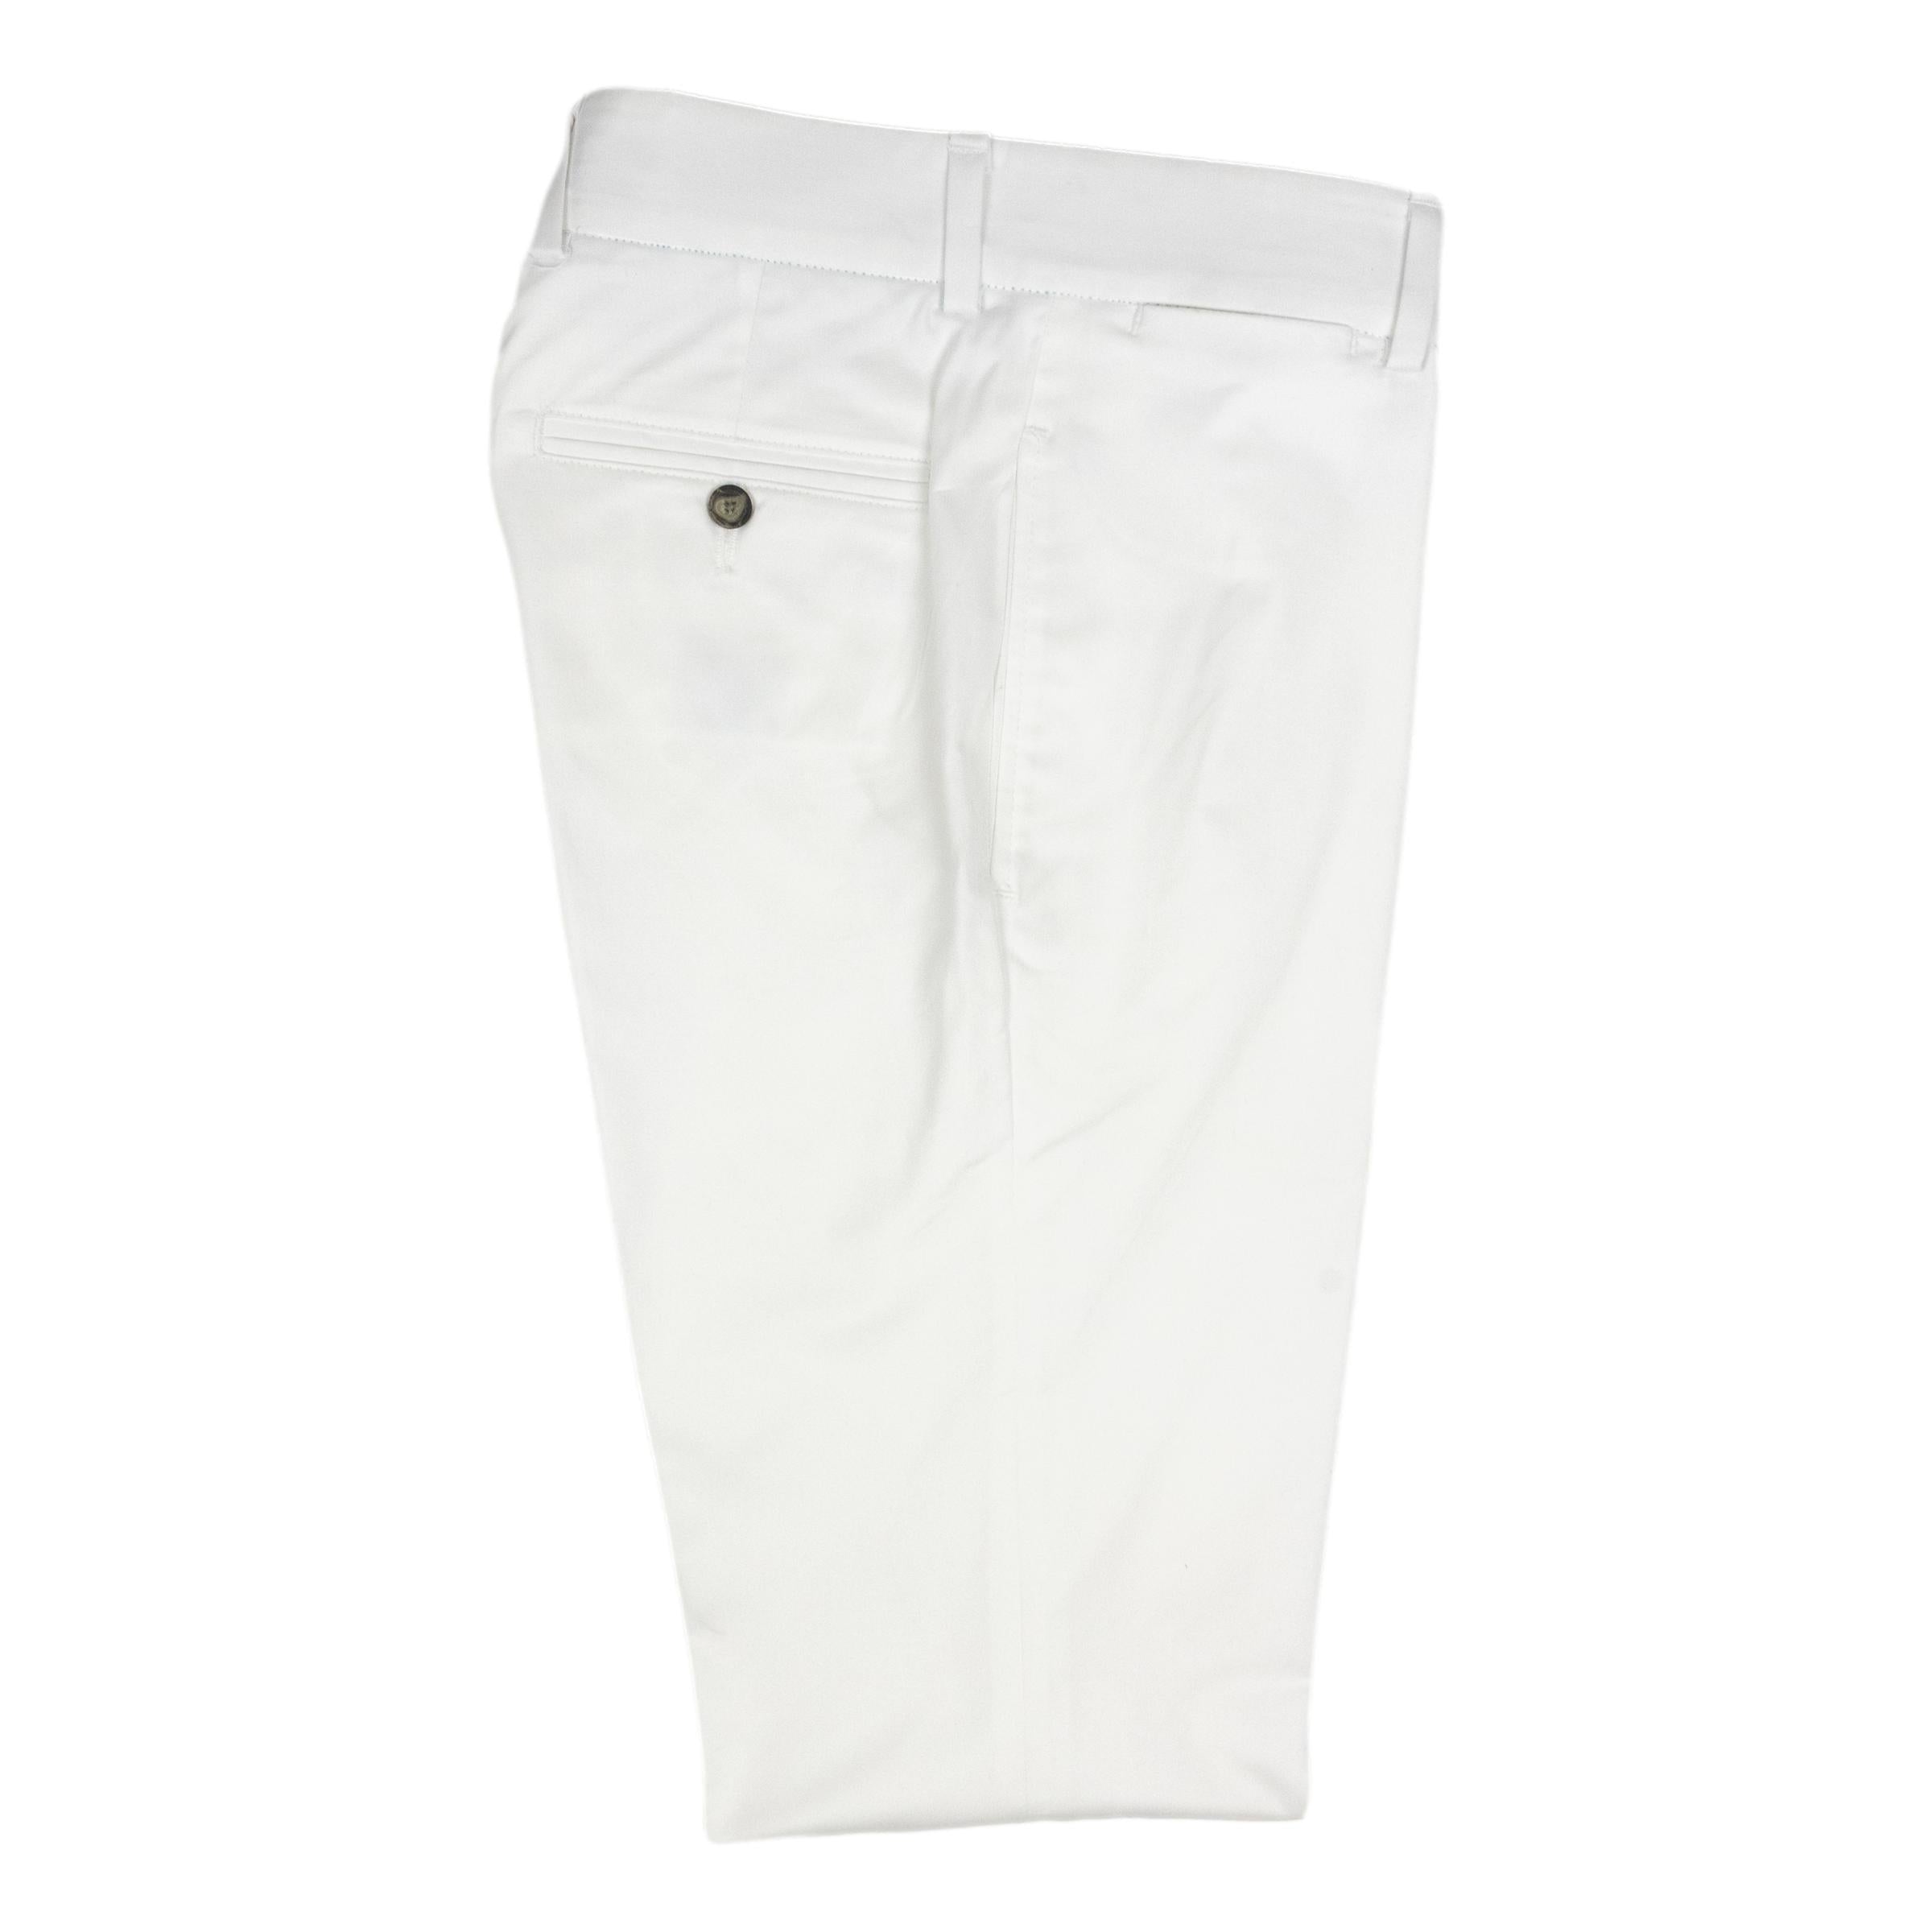 Cotton Khaki Twill Plain Front Trouser